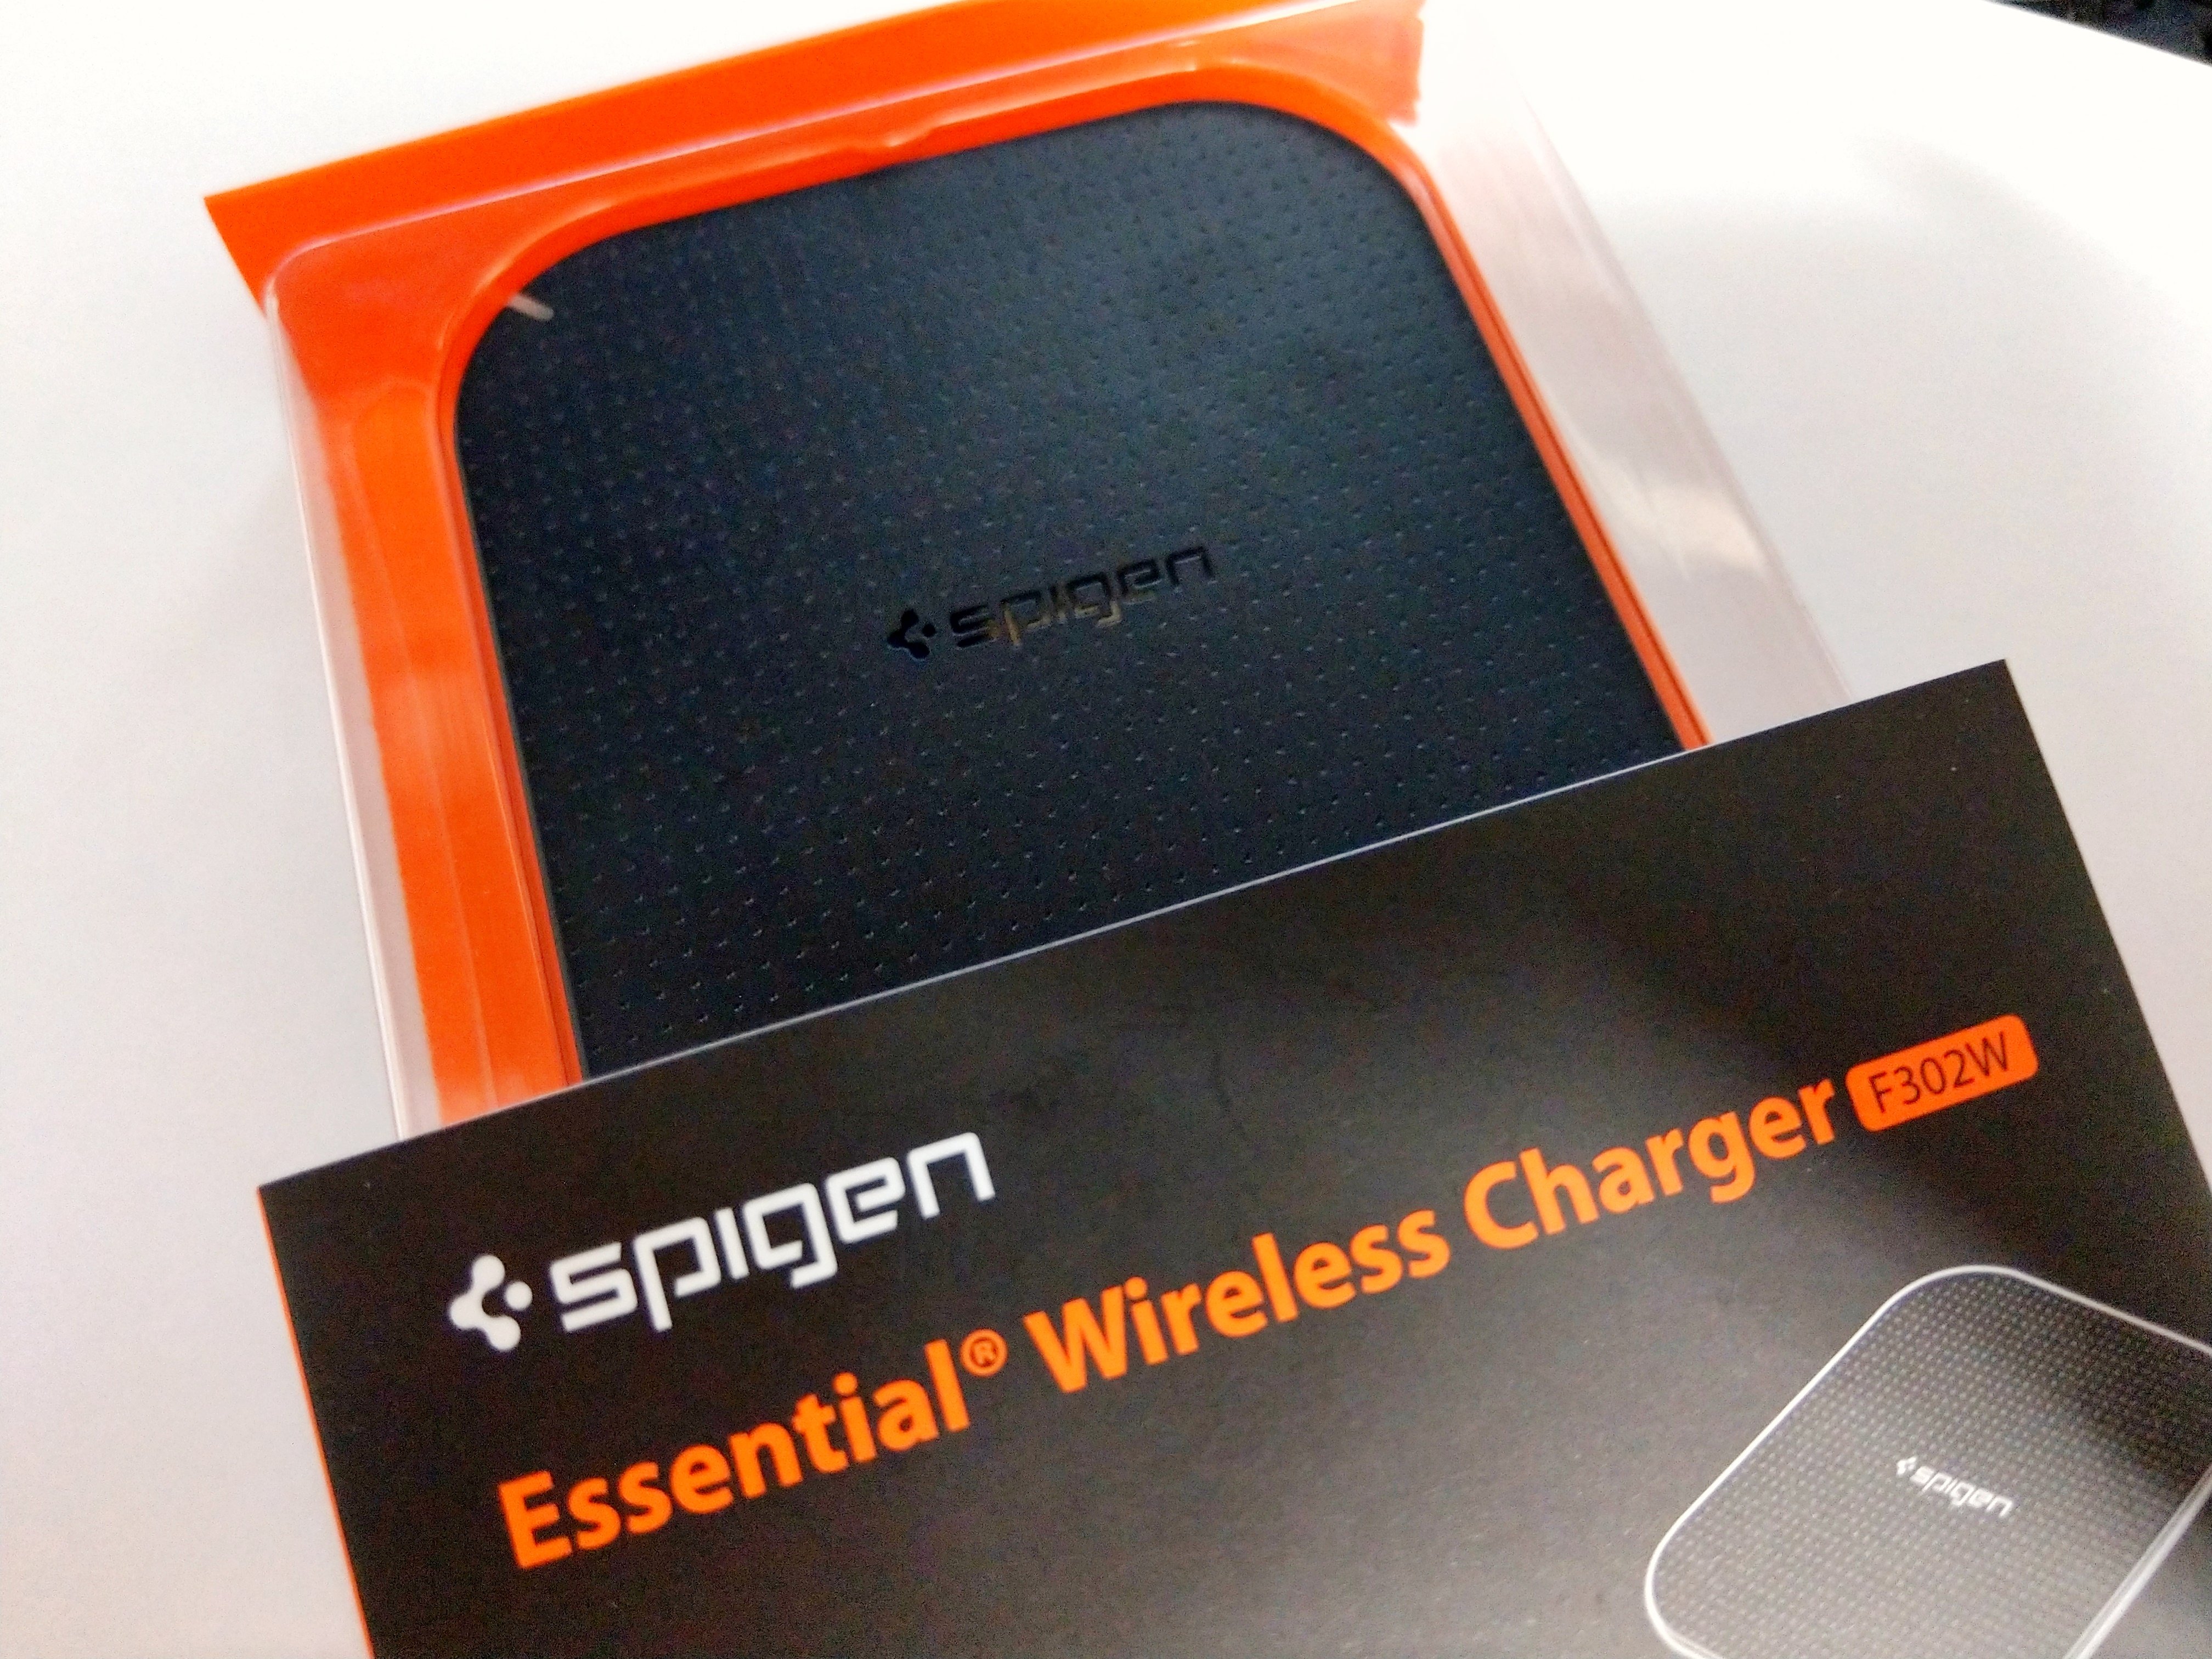 Spigen-Essential 無線充電器、iPhone X無線充電測試 - apple, f302w, huawei p20 pro, iphone 8, iphone 8plus, iphone x, qi, samsung note8, samsung s9, spigen, wireless, 充電器, 無線充電 - 科技生活 - teXch